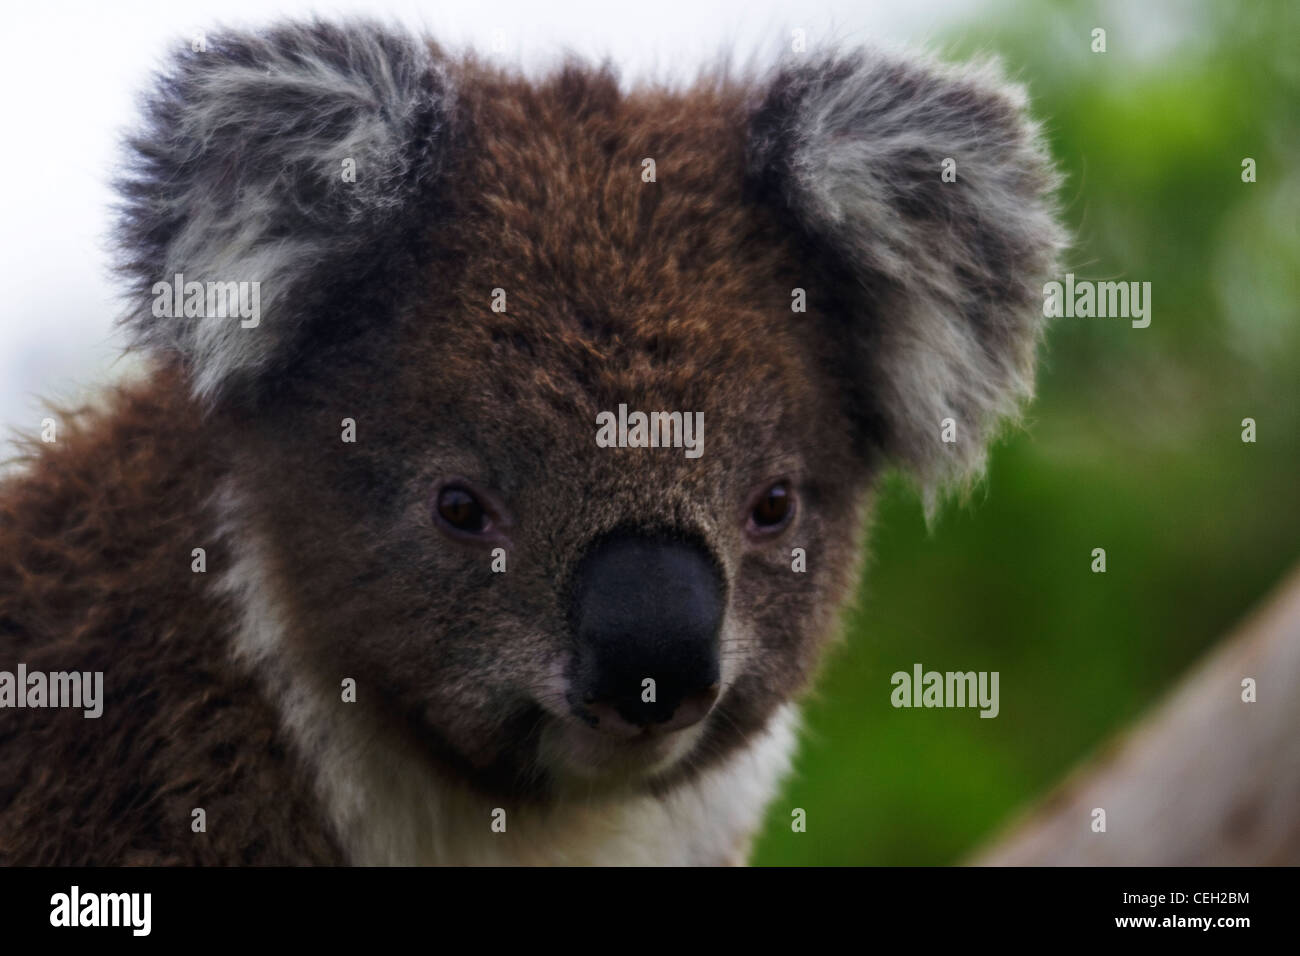 Wild koalas on Victoria's Cape Otway. Koala is an iconic Australian symbol and a tourist attraction. Stock Photo